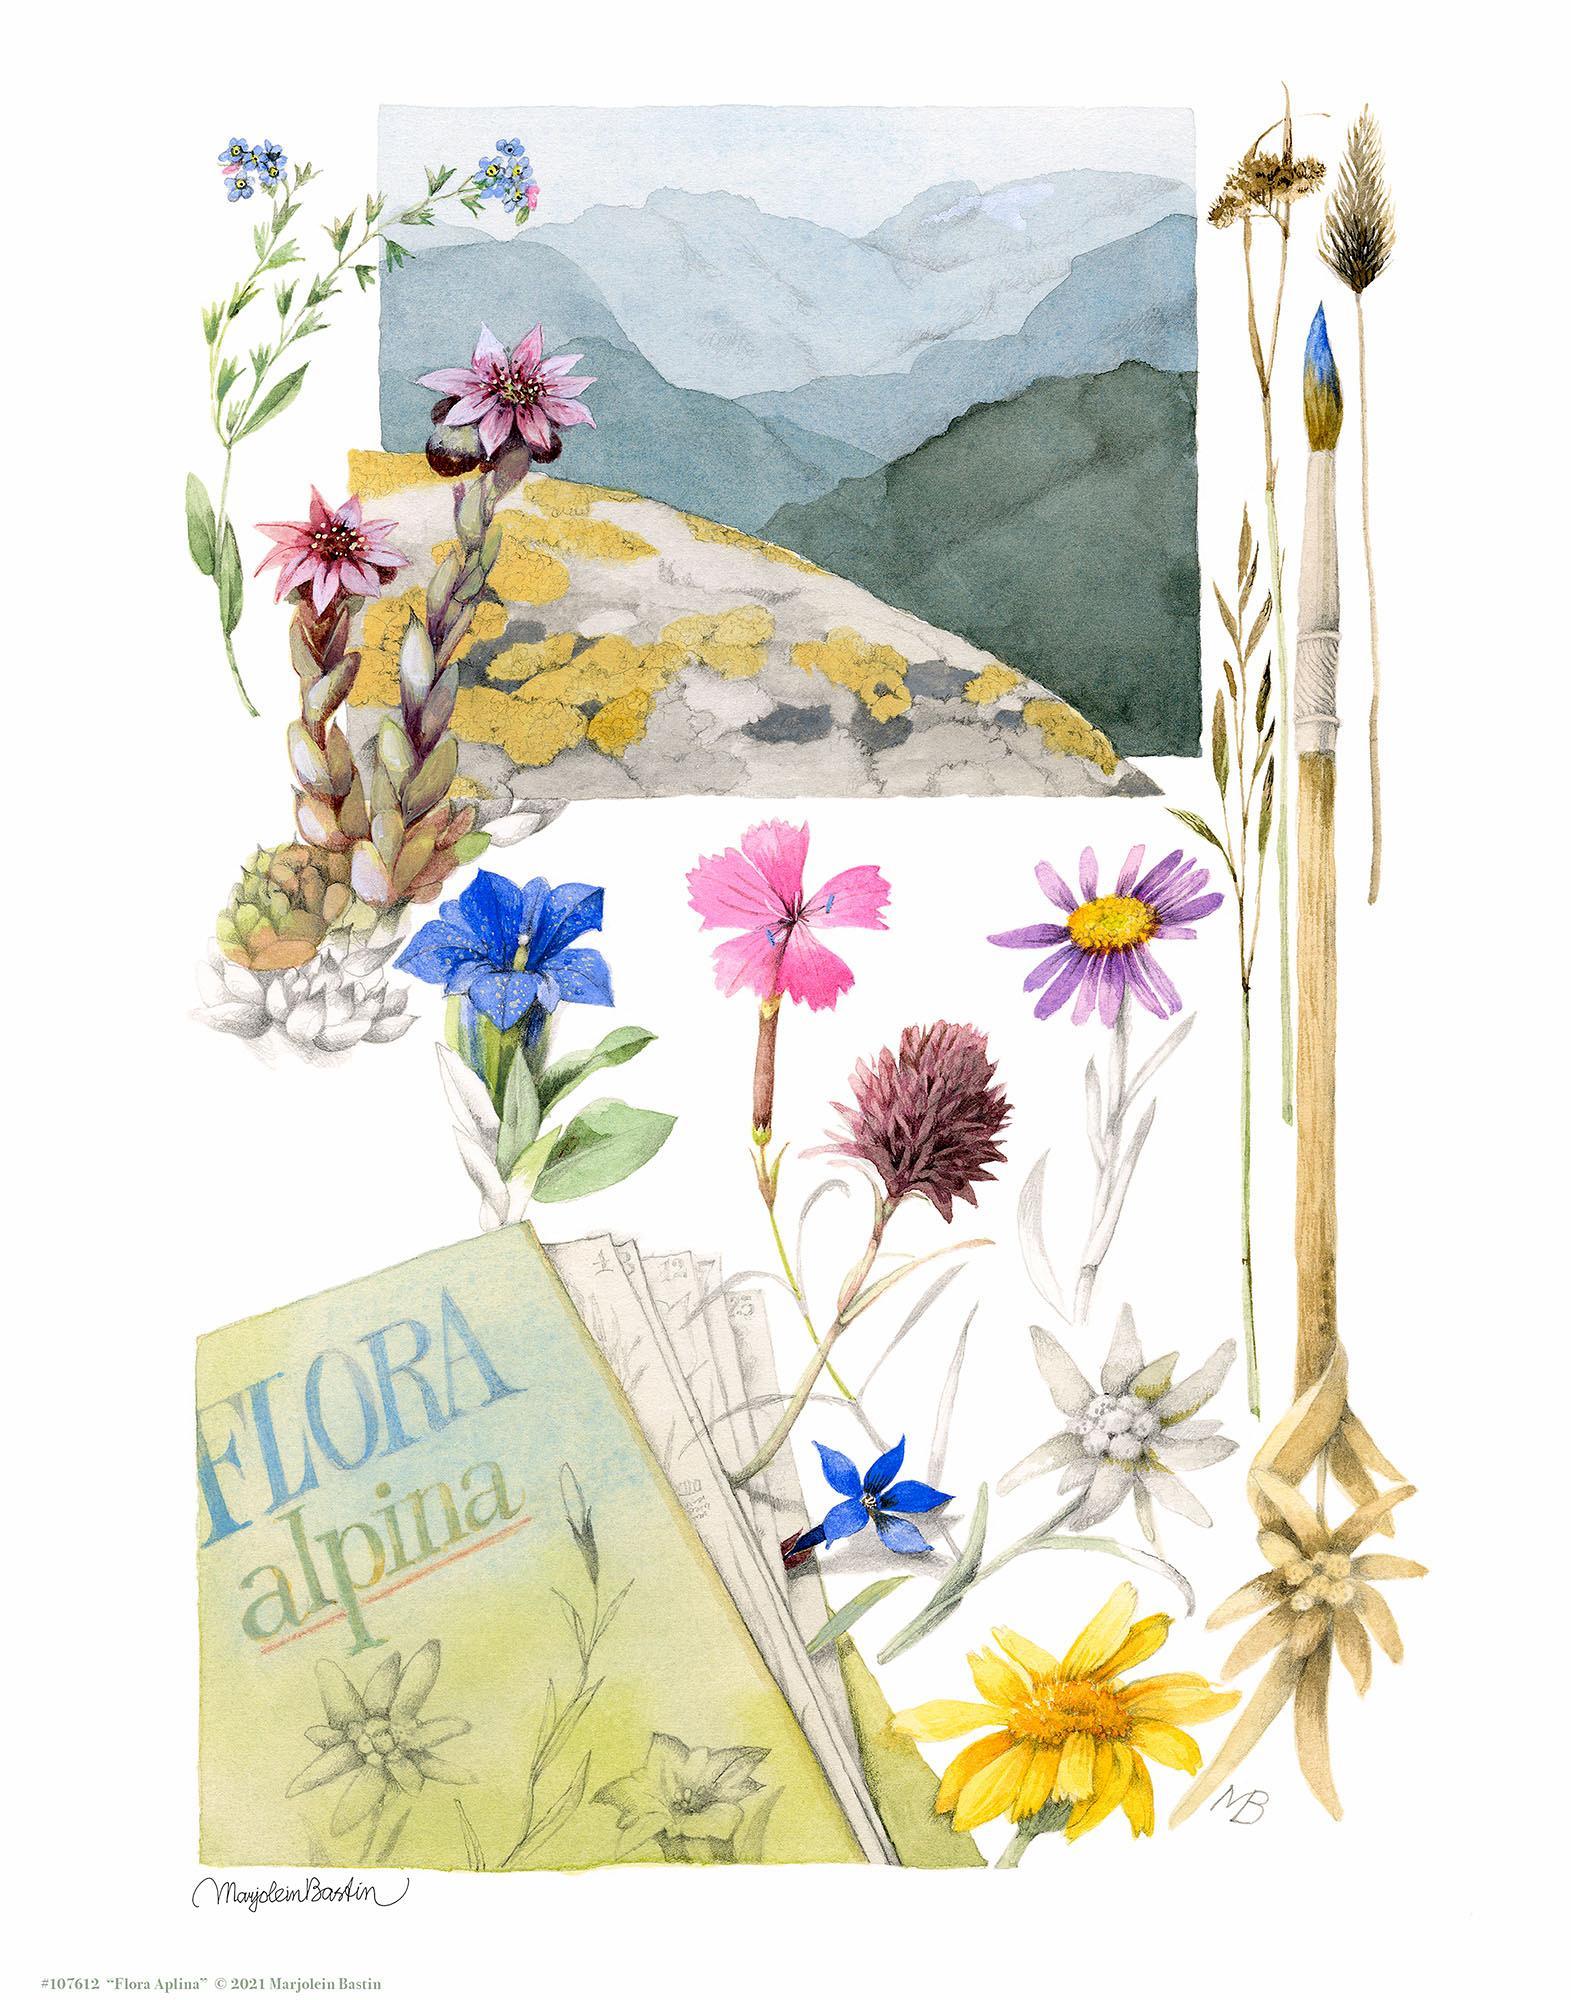 flora-alpina-art-collection-1058224890IG.jpg